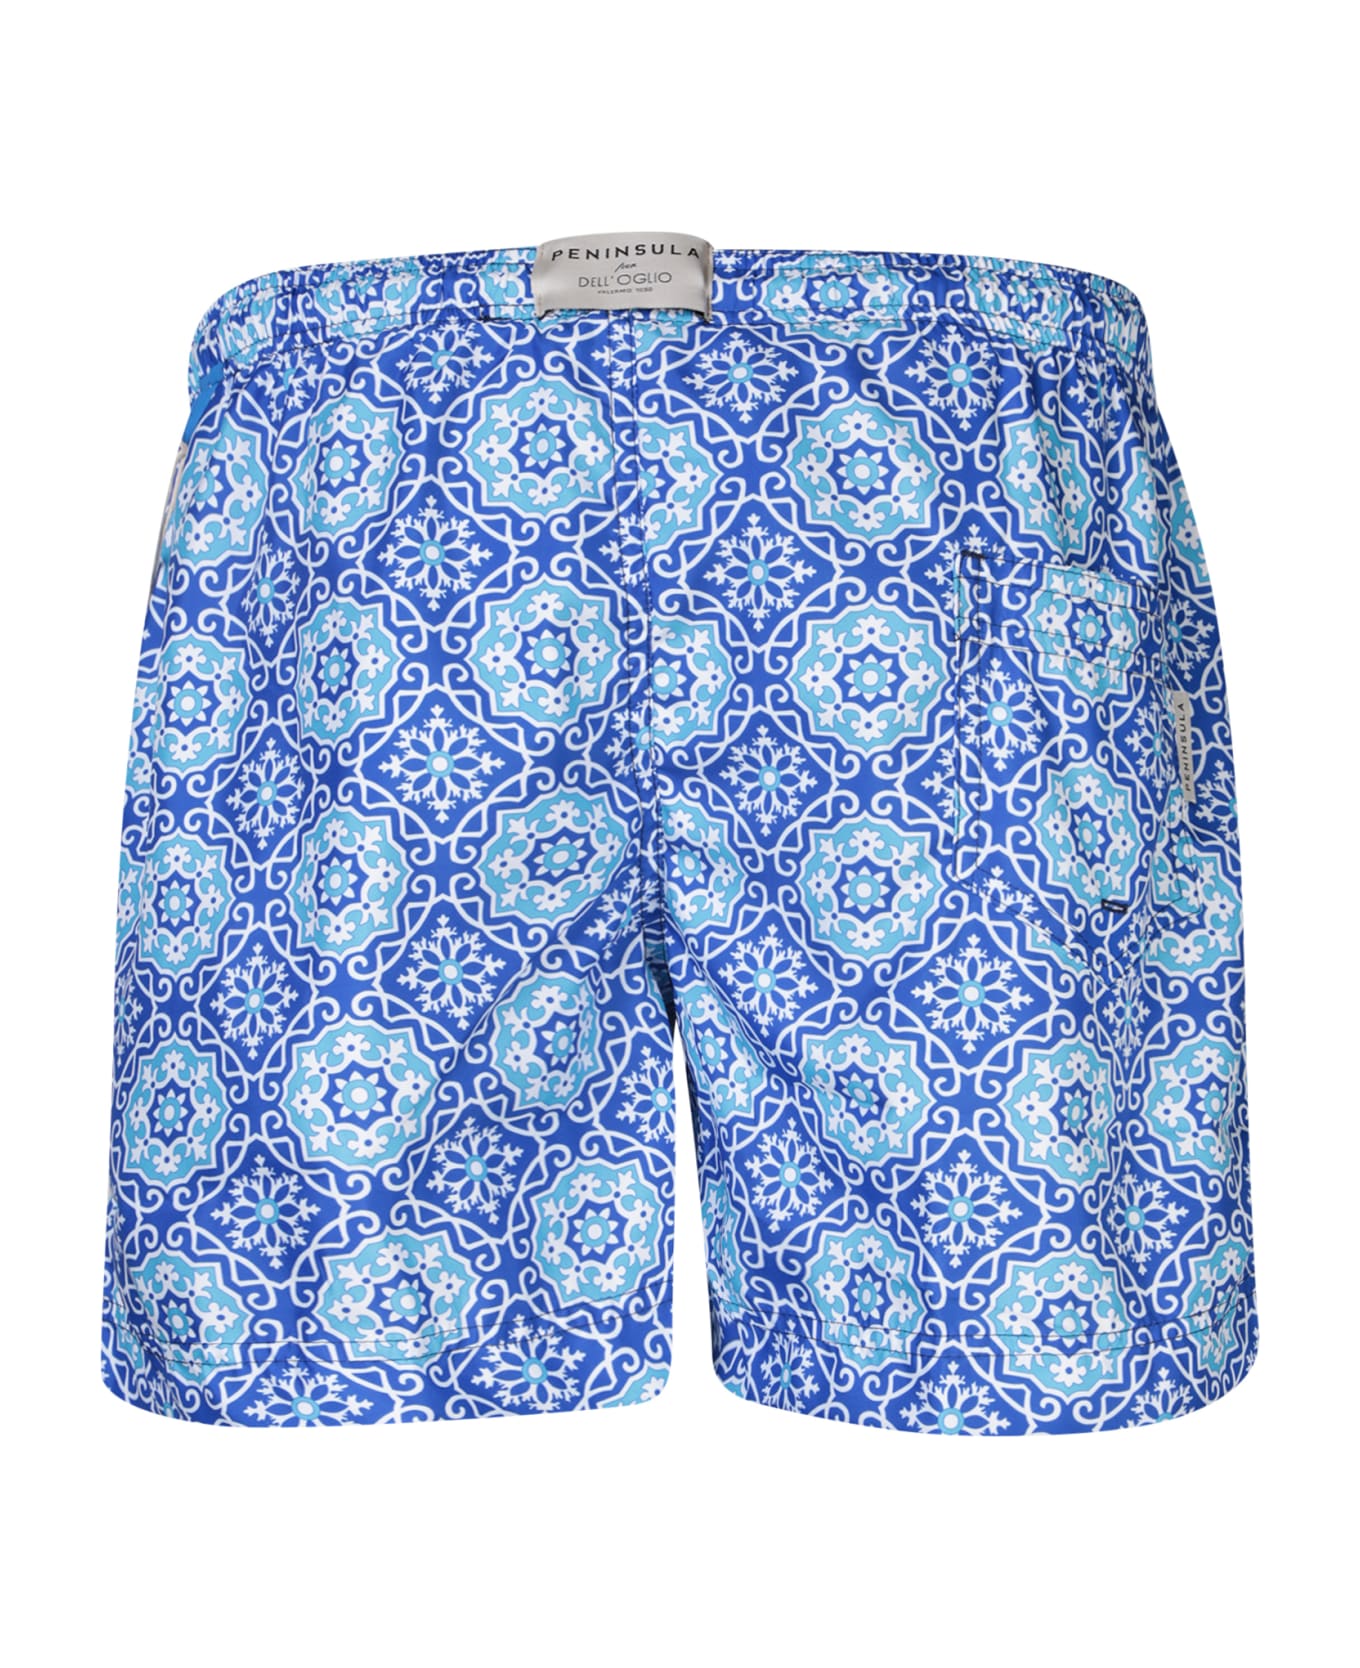 Peninsula Swimwear Patterned Blue Boxer Swim Shorts - Blue